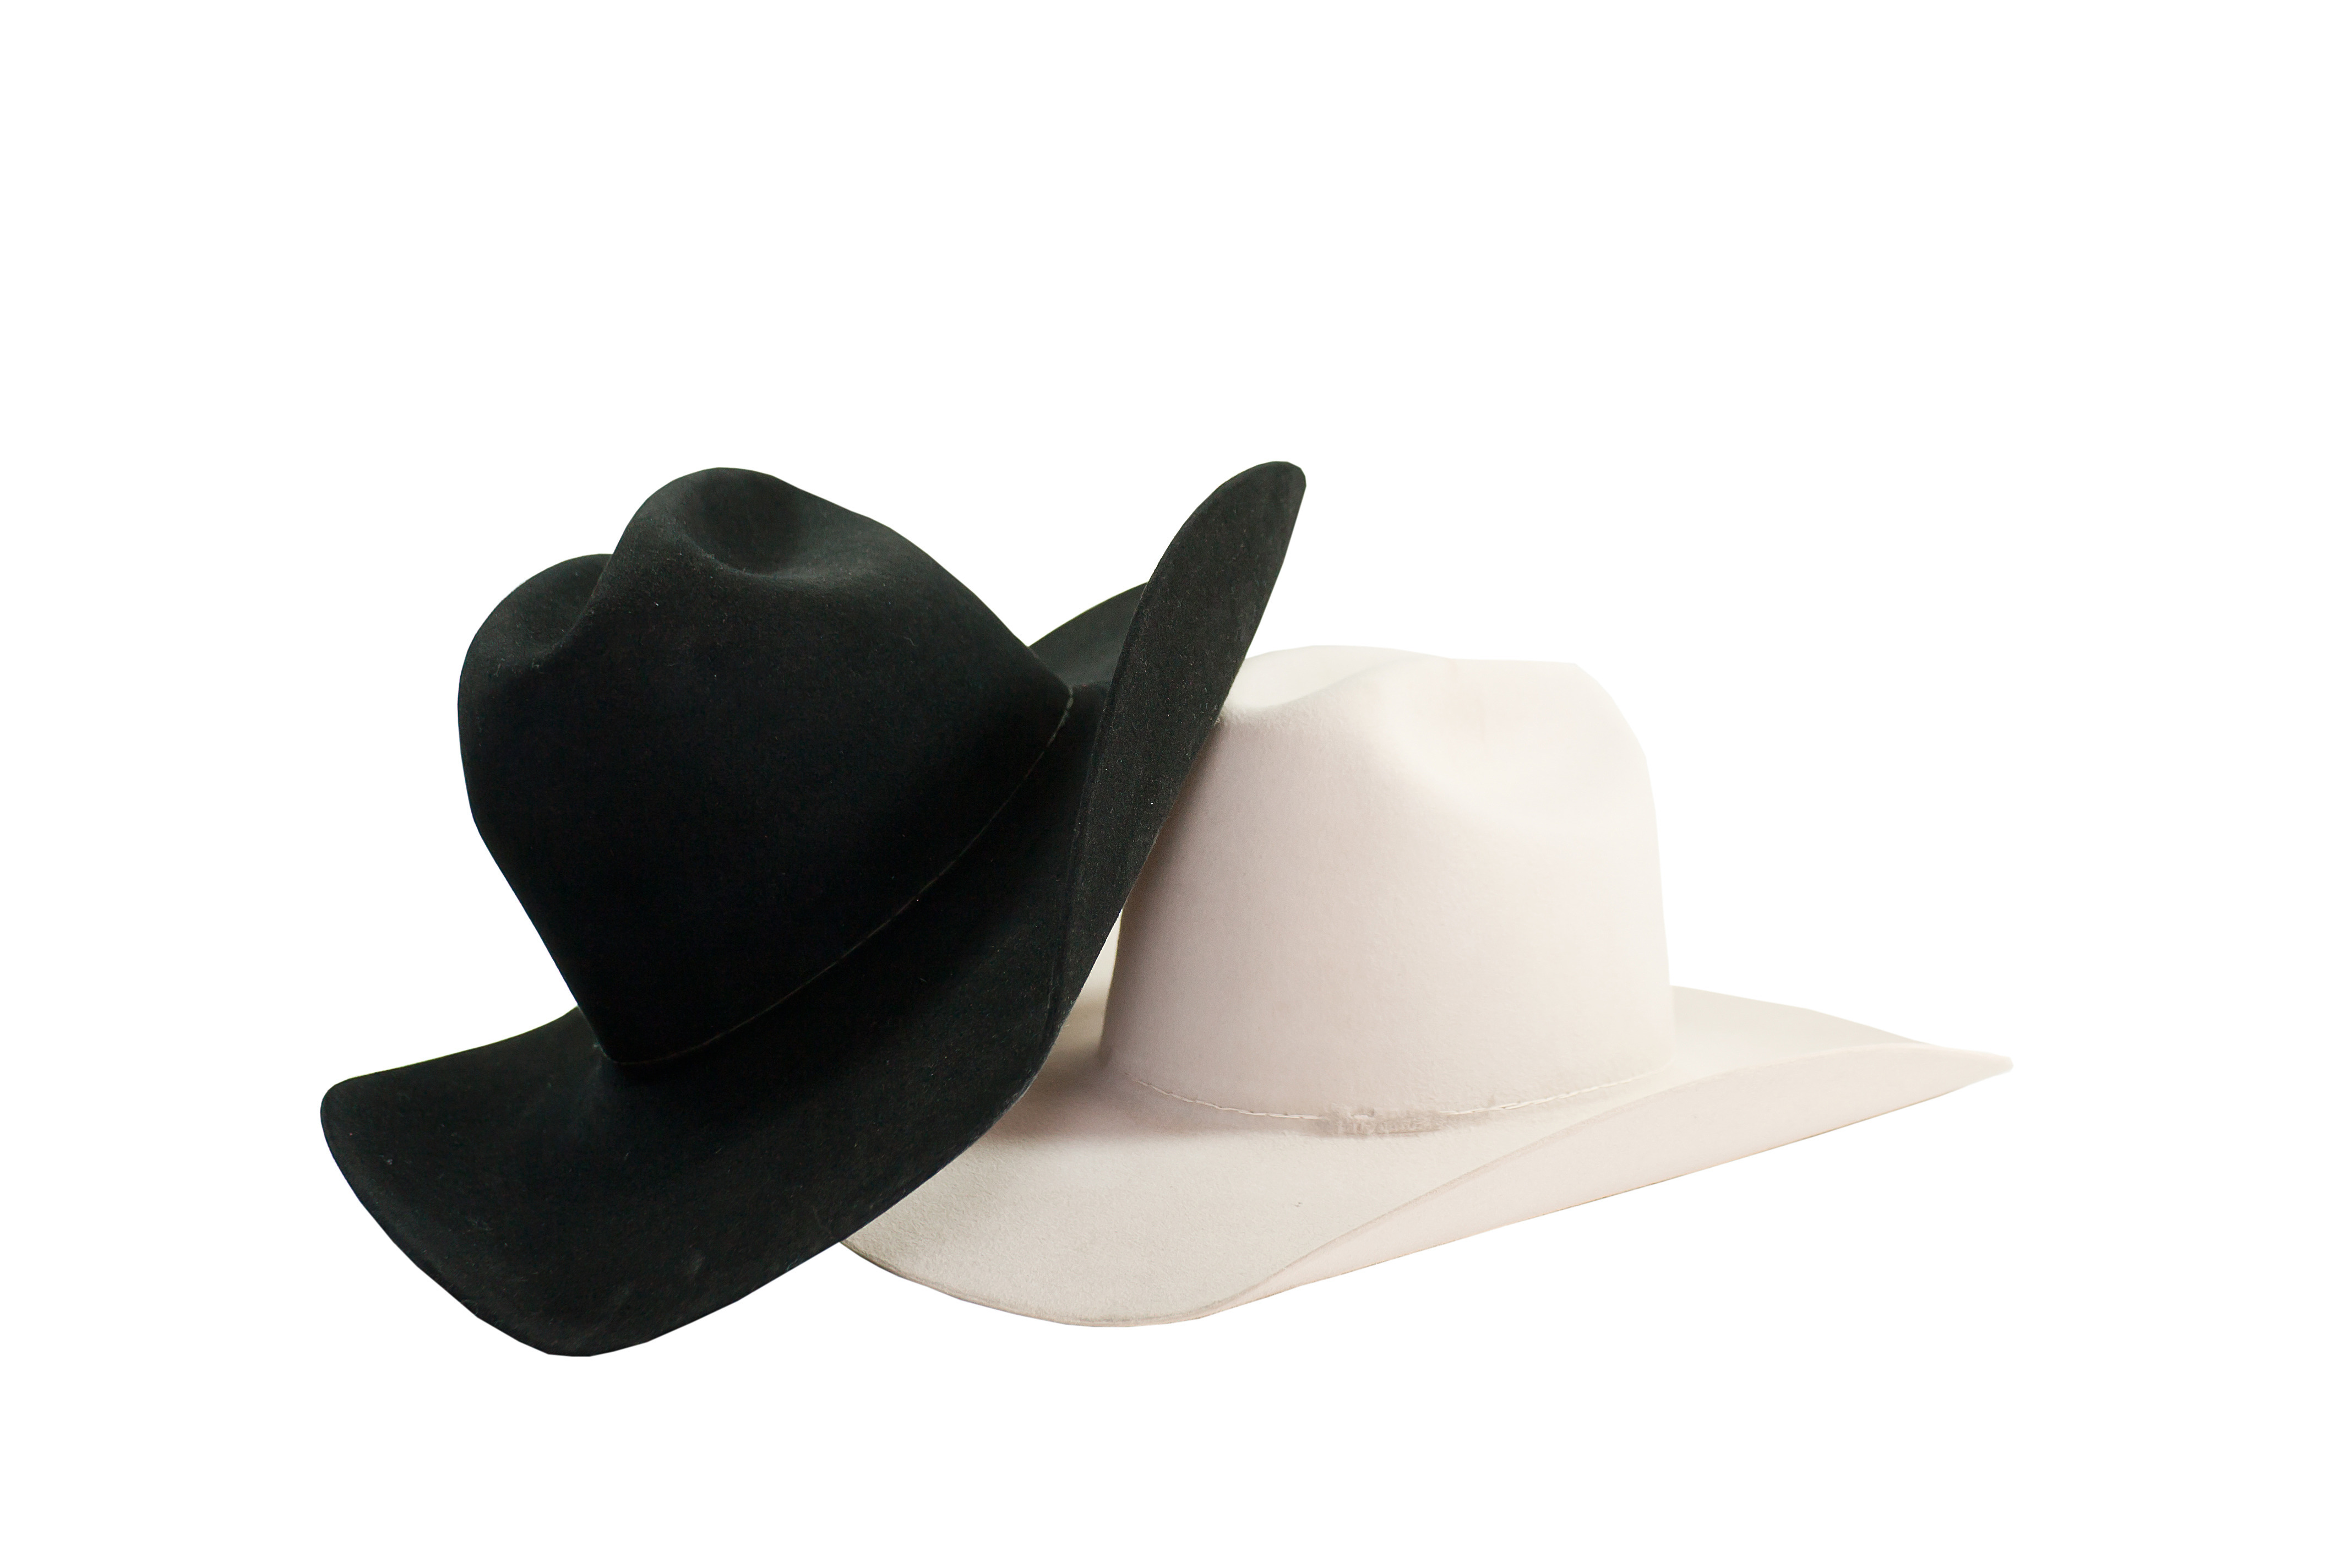 white hat vs black hat vs grey hat link building